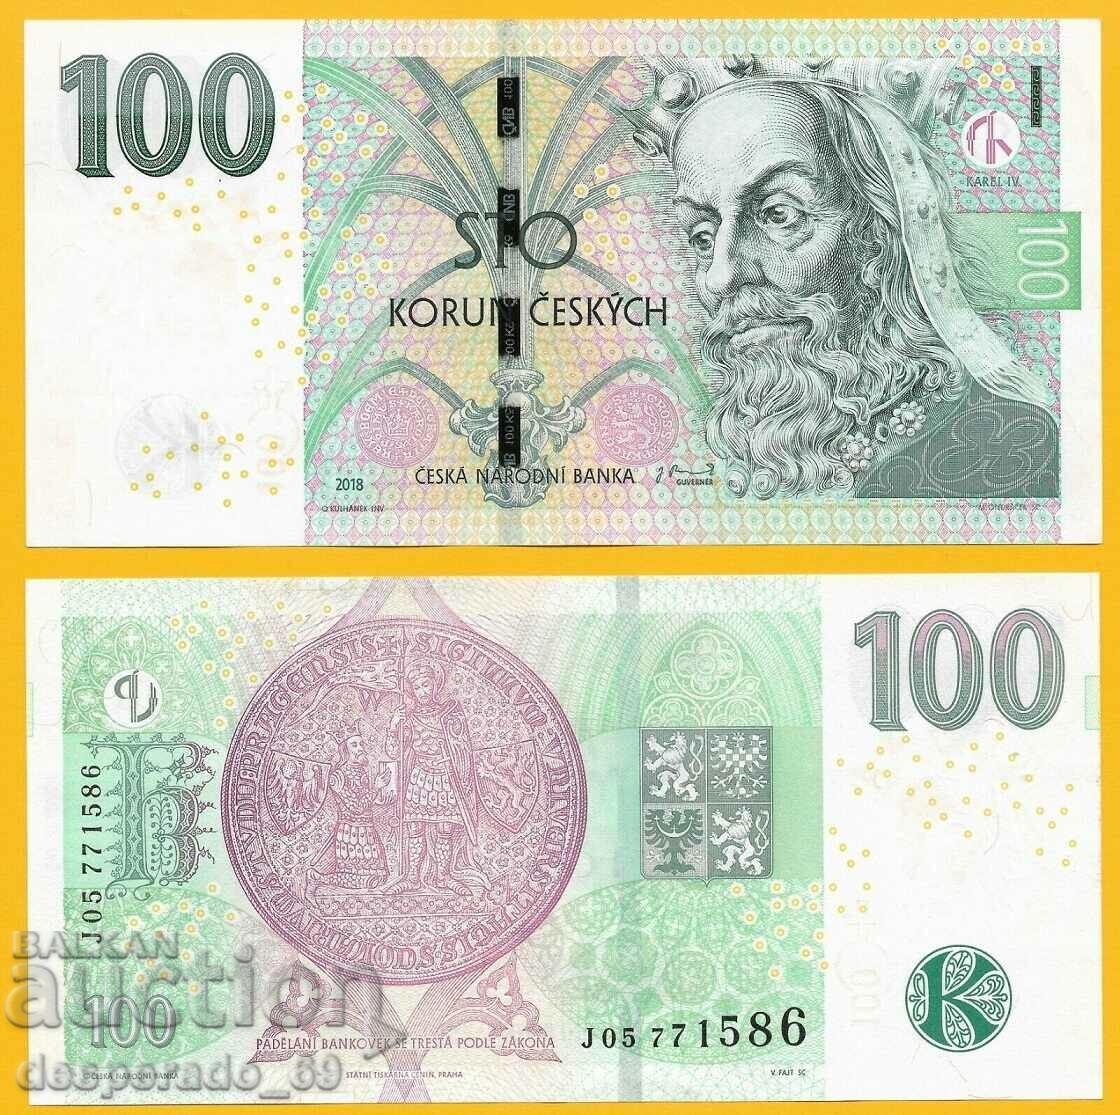 (¯`'•.¸ CZECH REPUBLIC 100 kroner 2018 UNC ¸.•'´¯)